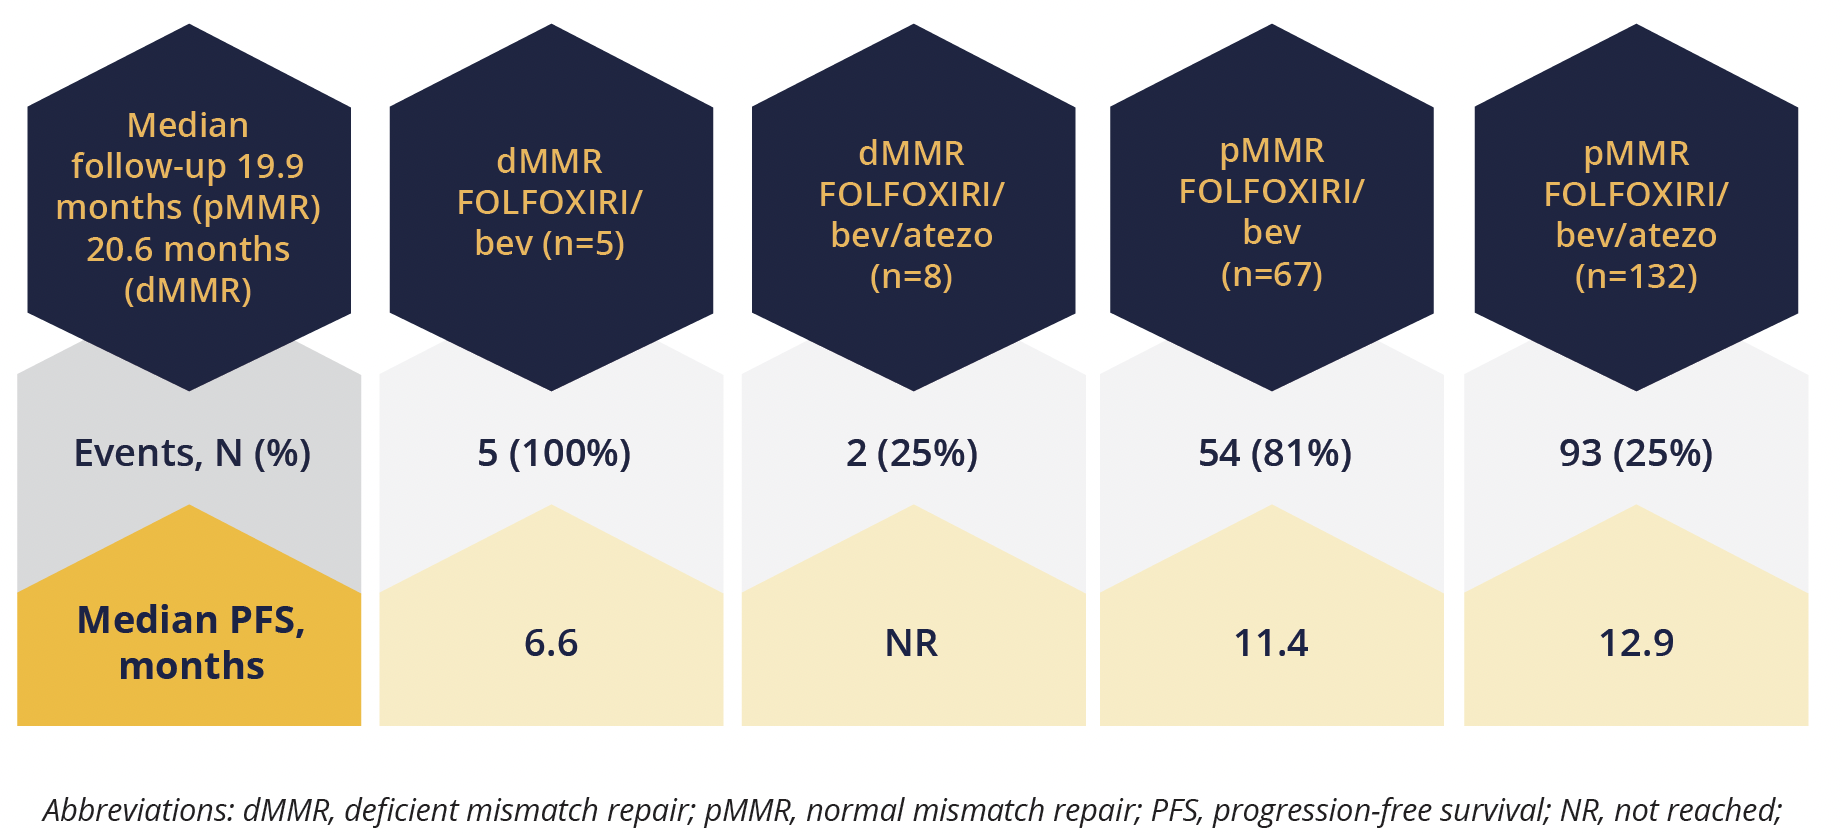 Superior response to atezolizumab in individuals with deficient mismatch repair versus normal mismatch repair